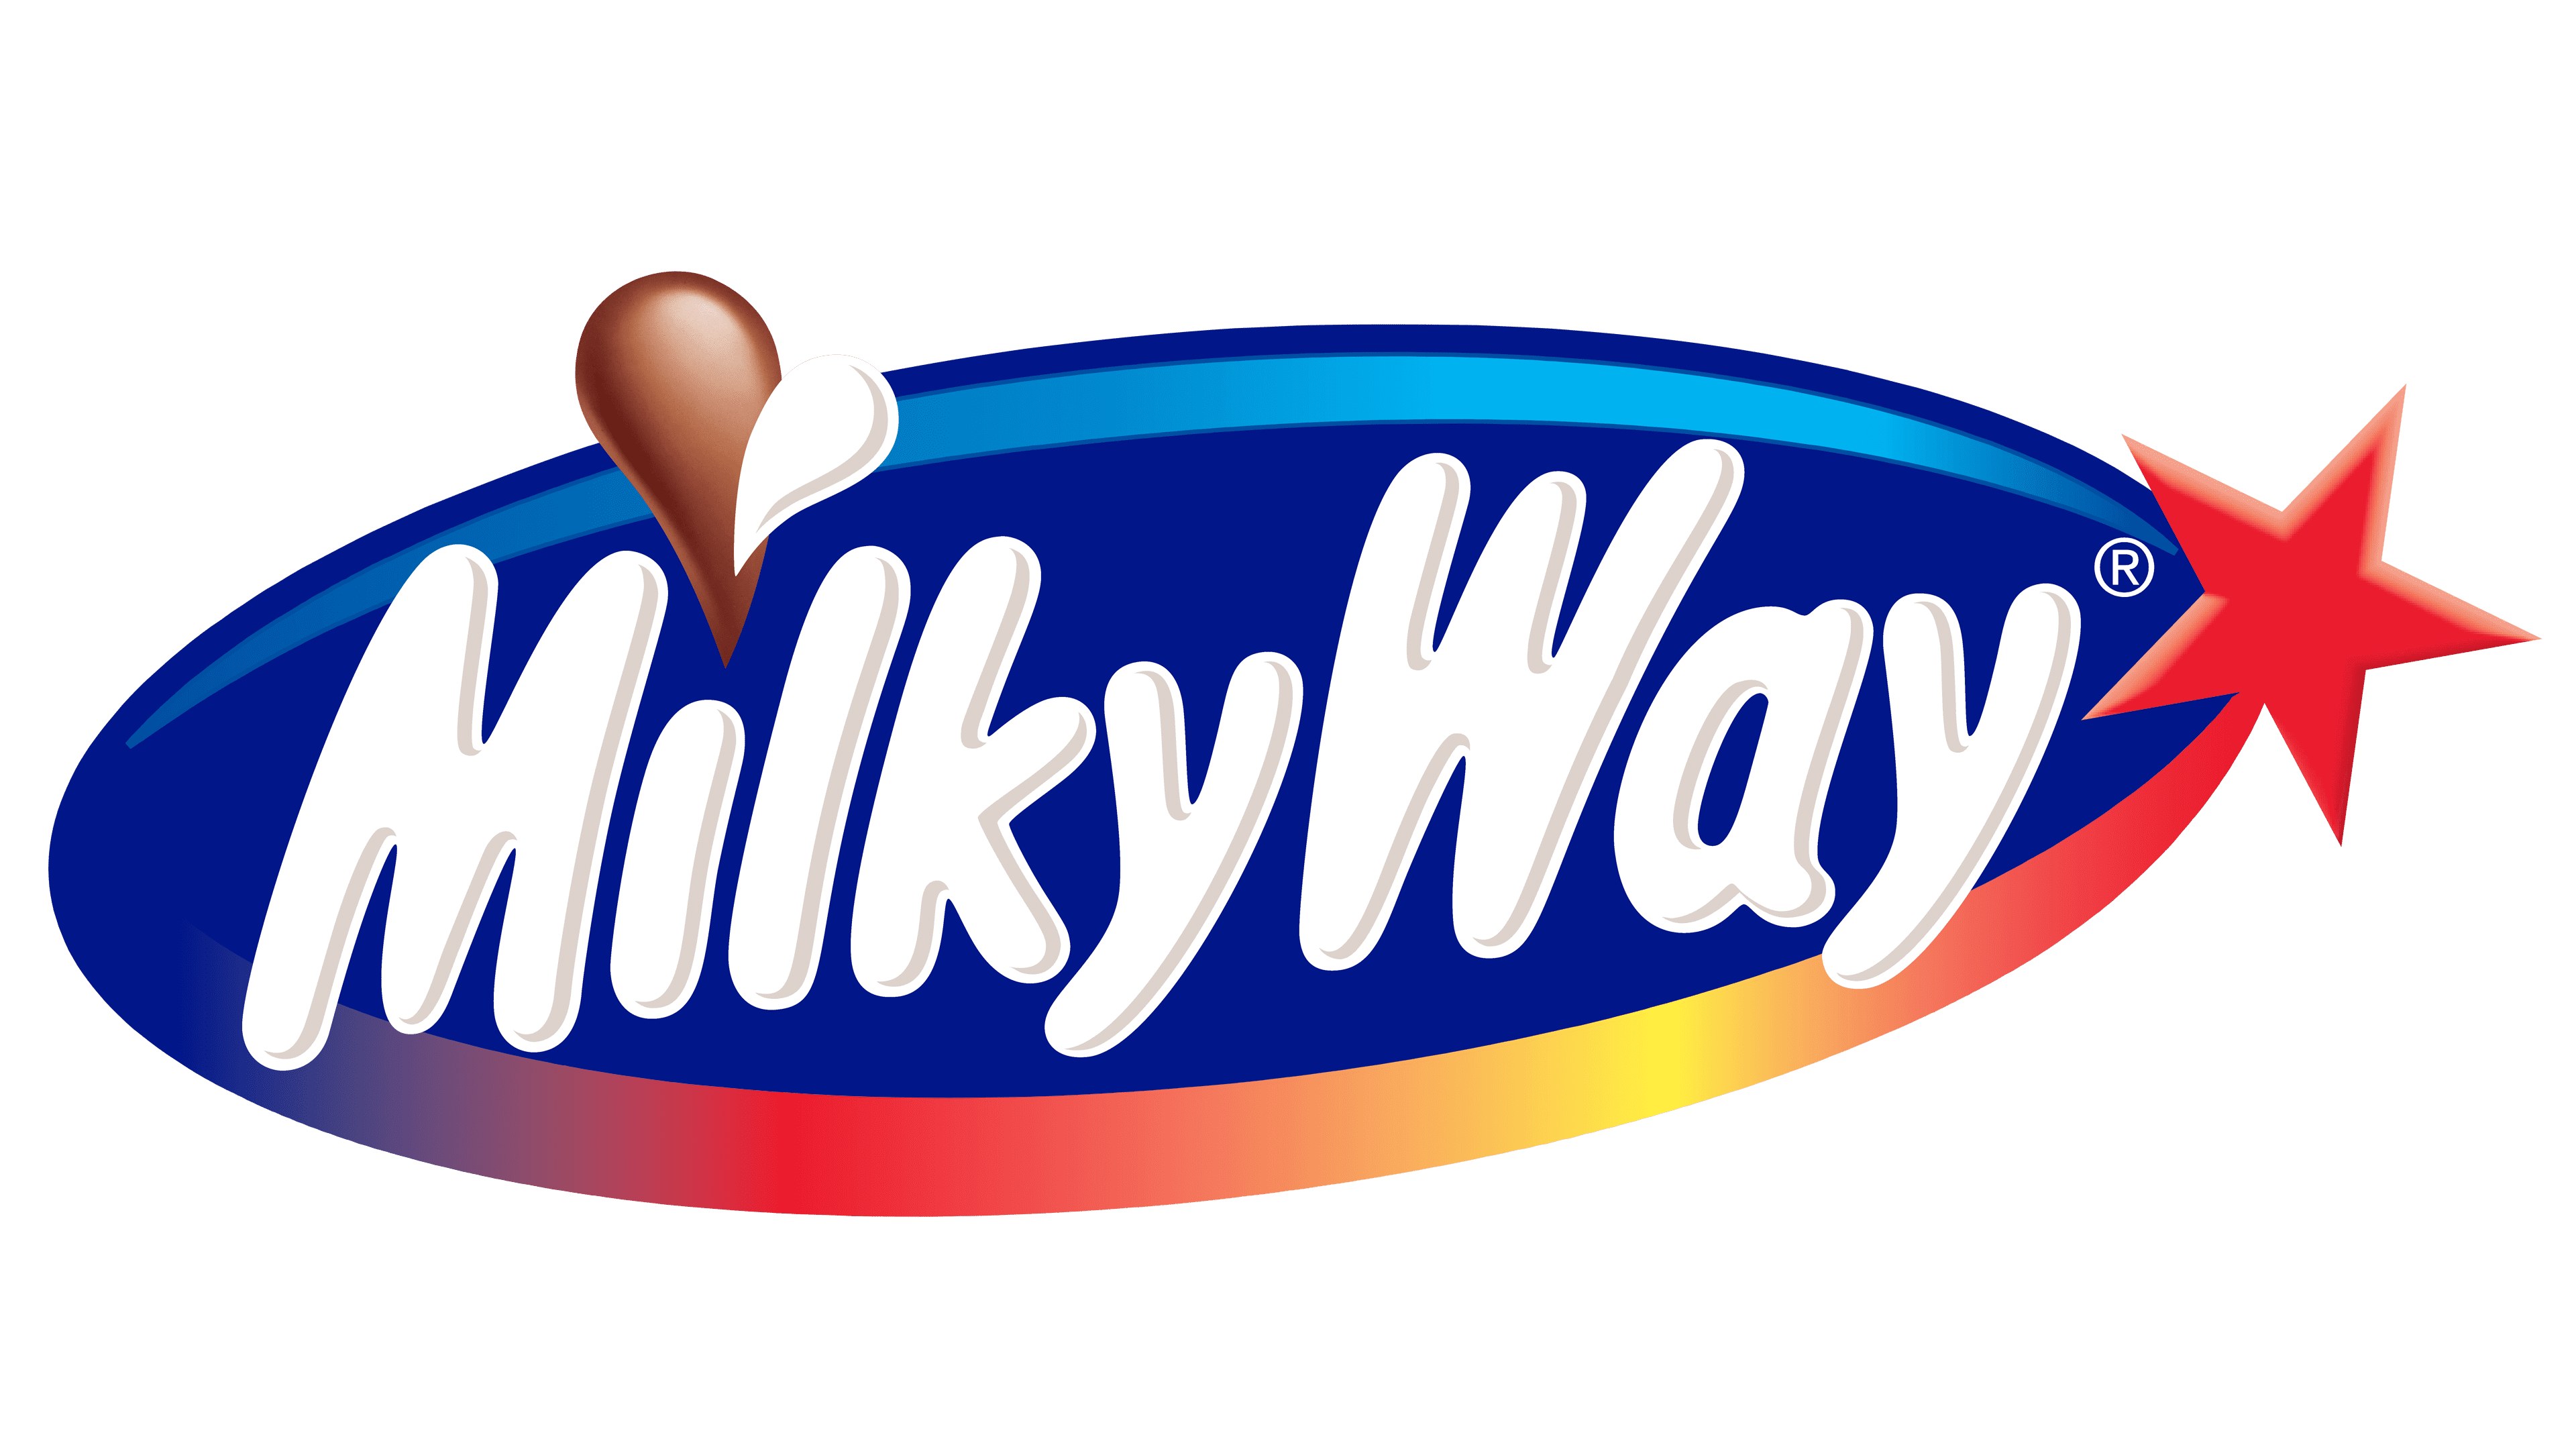 Milky Way Chocolate Logo